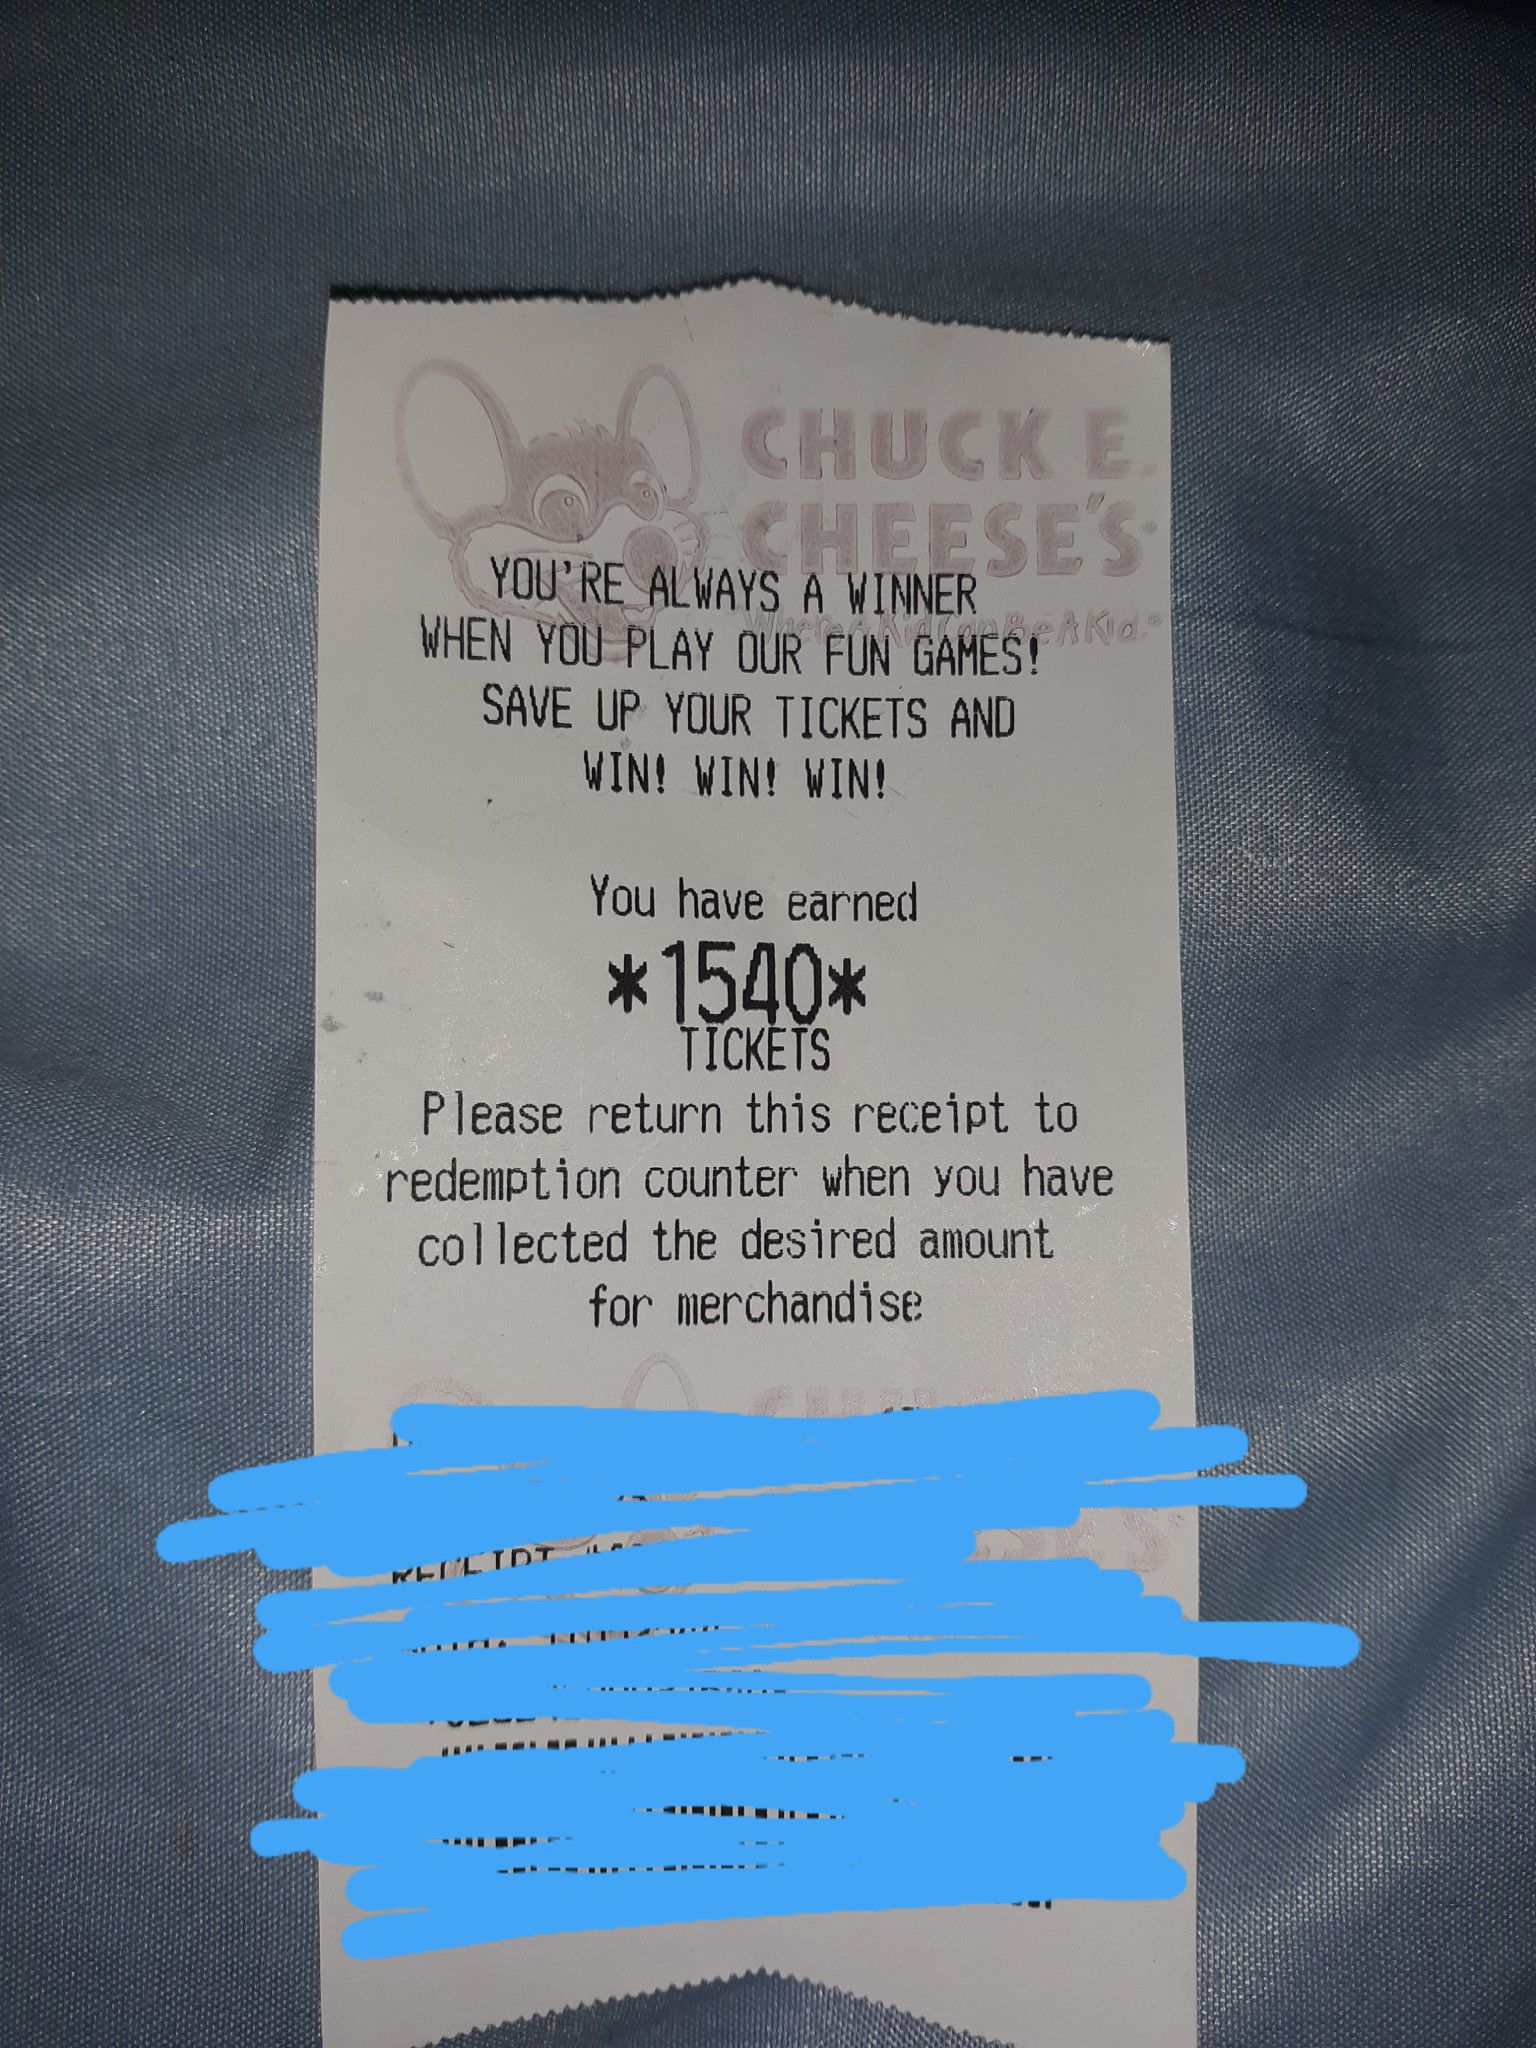 Chuck e cheese tickets